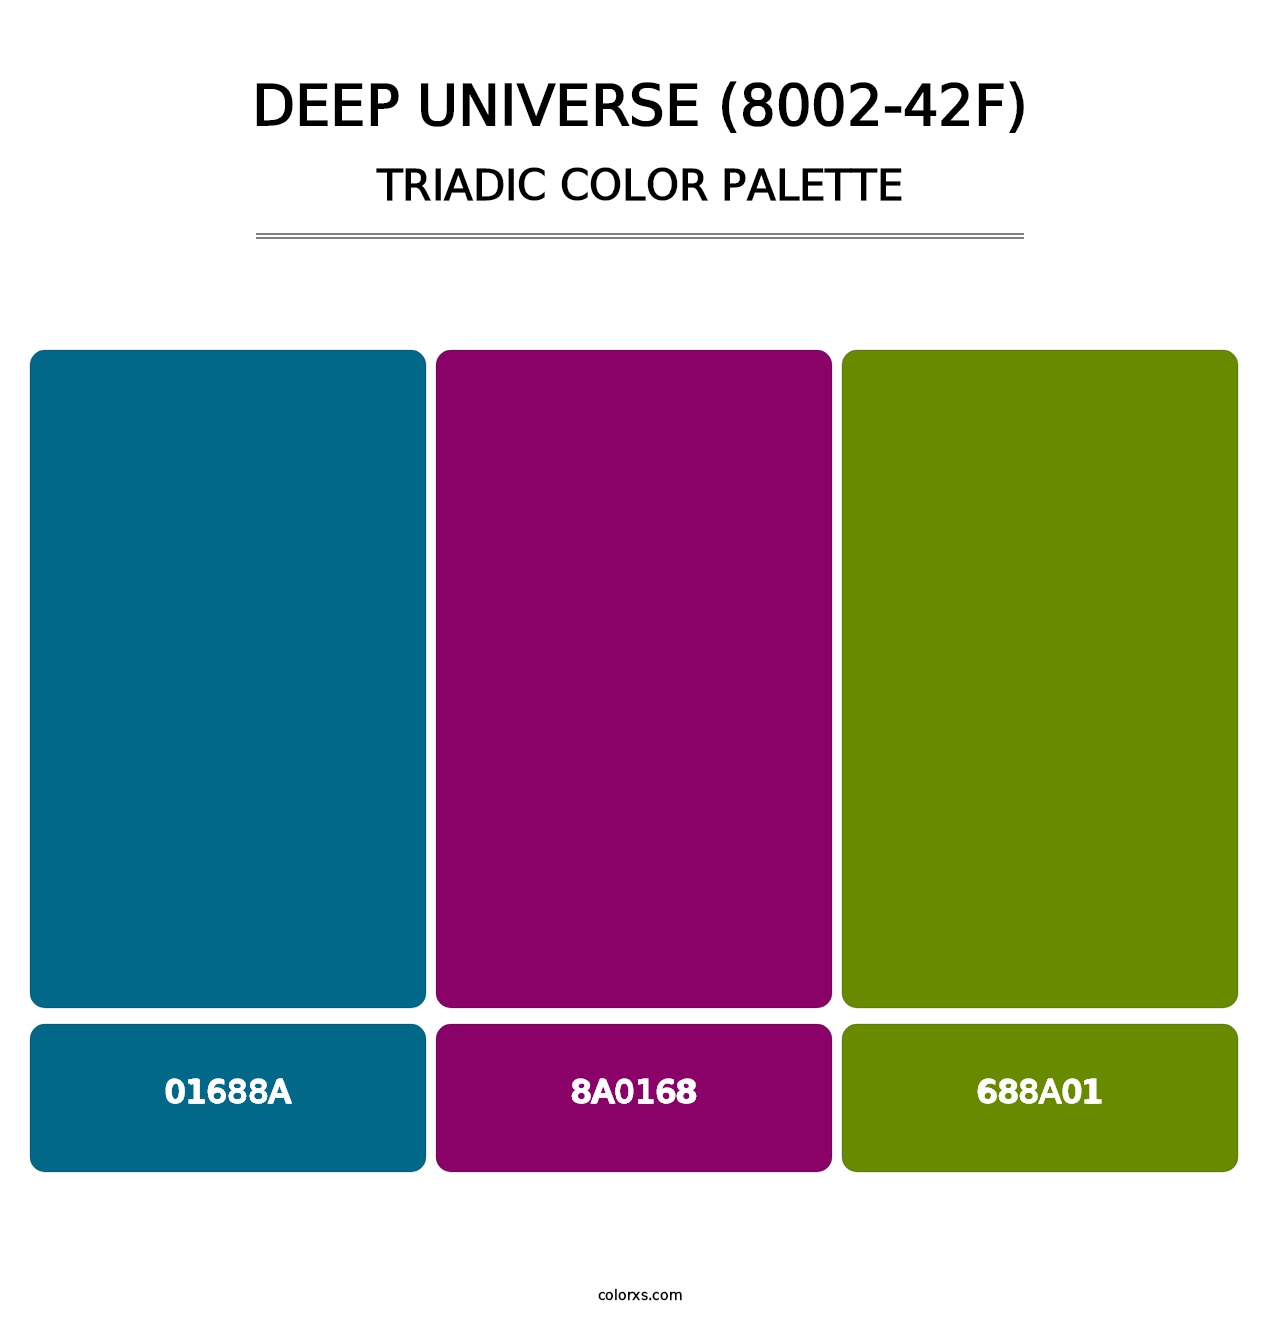 Deep Universe (8002-42F) - Triadic Color Palette